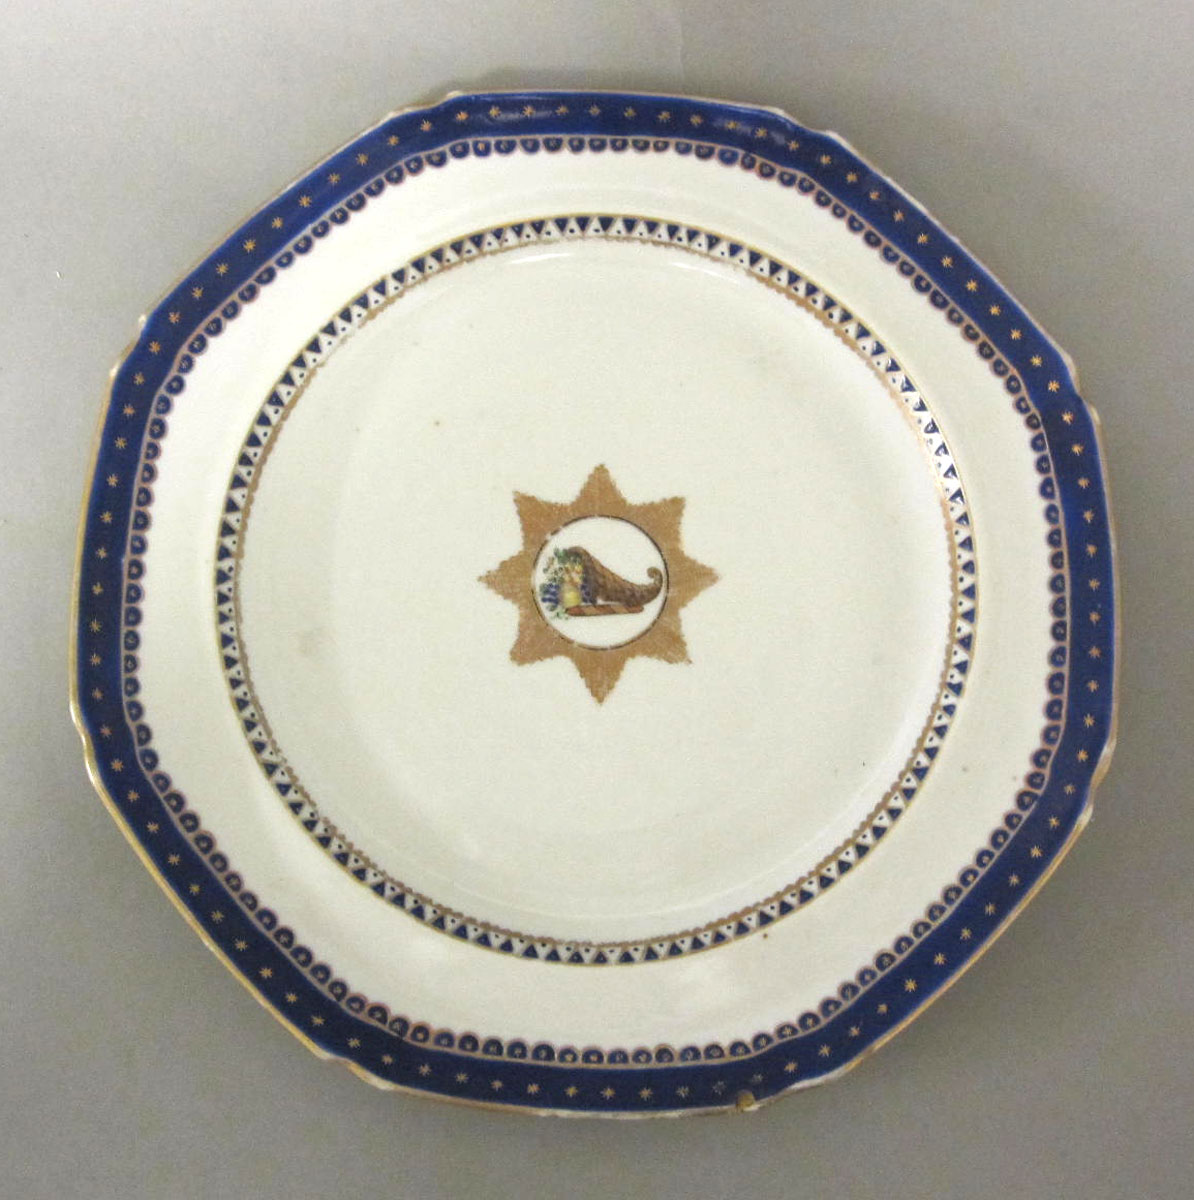 1965.0718.004 Porcelain plate